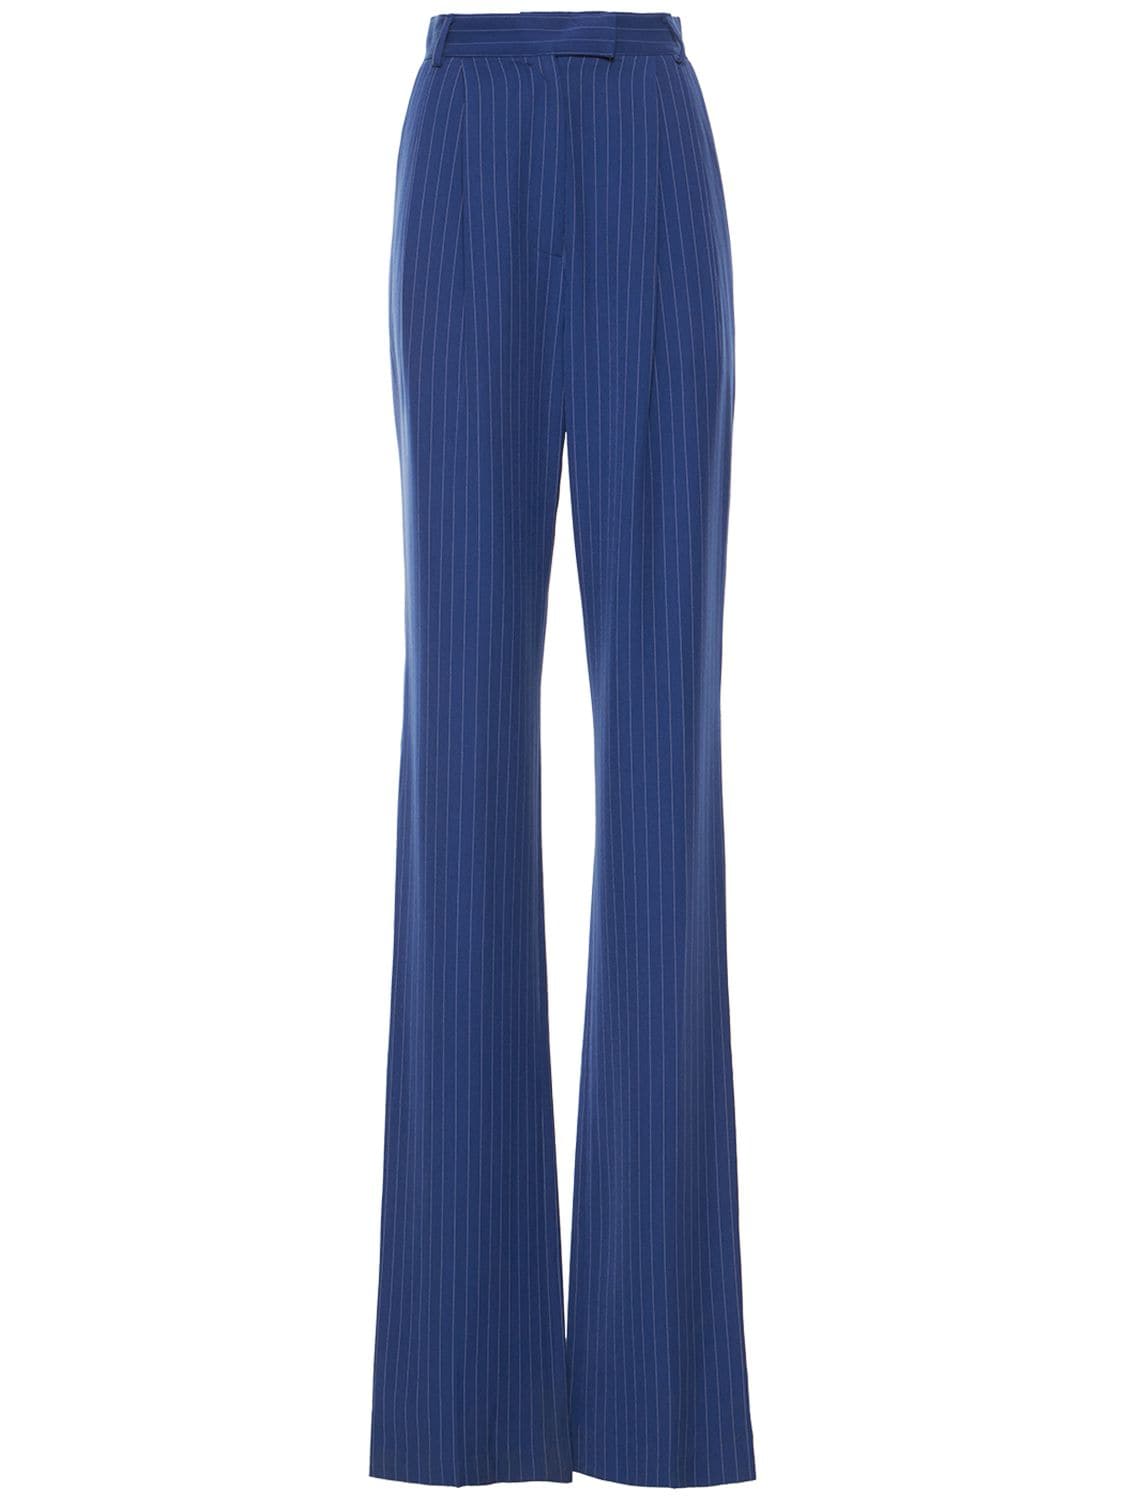 The Frankie Shop Bea Fluid Straight Pants In Blue | ModeSens